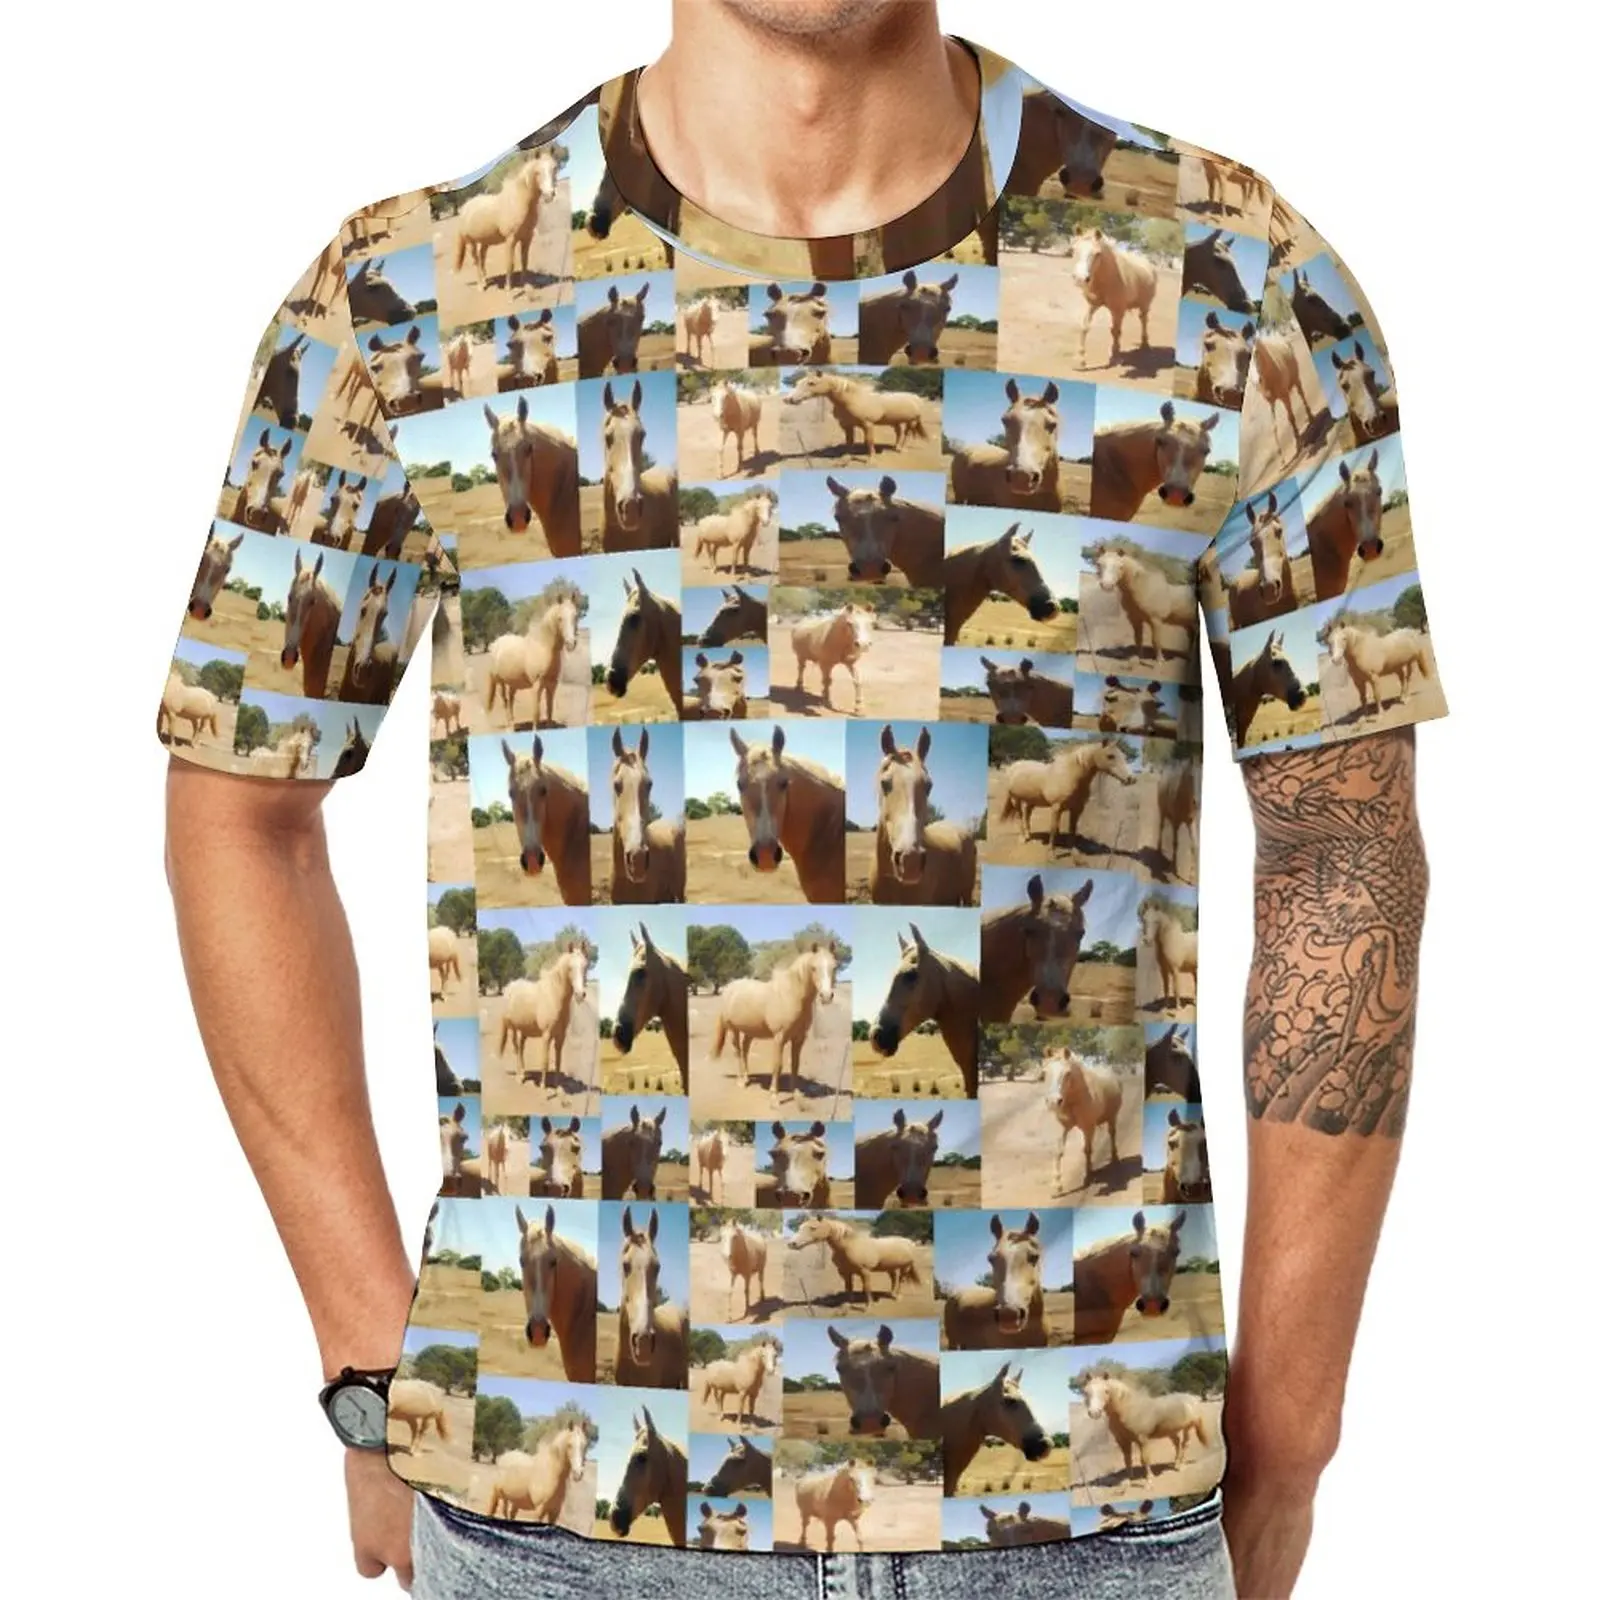 

Palomino Horse T Shirt Farm Animal Print Men Fashion T-Shirts Original Graphic Tees Short Sleeve Fun Plus Size Tops Gift Idea